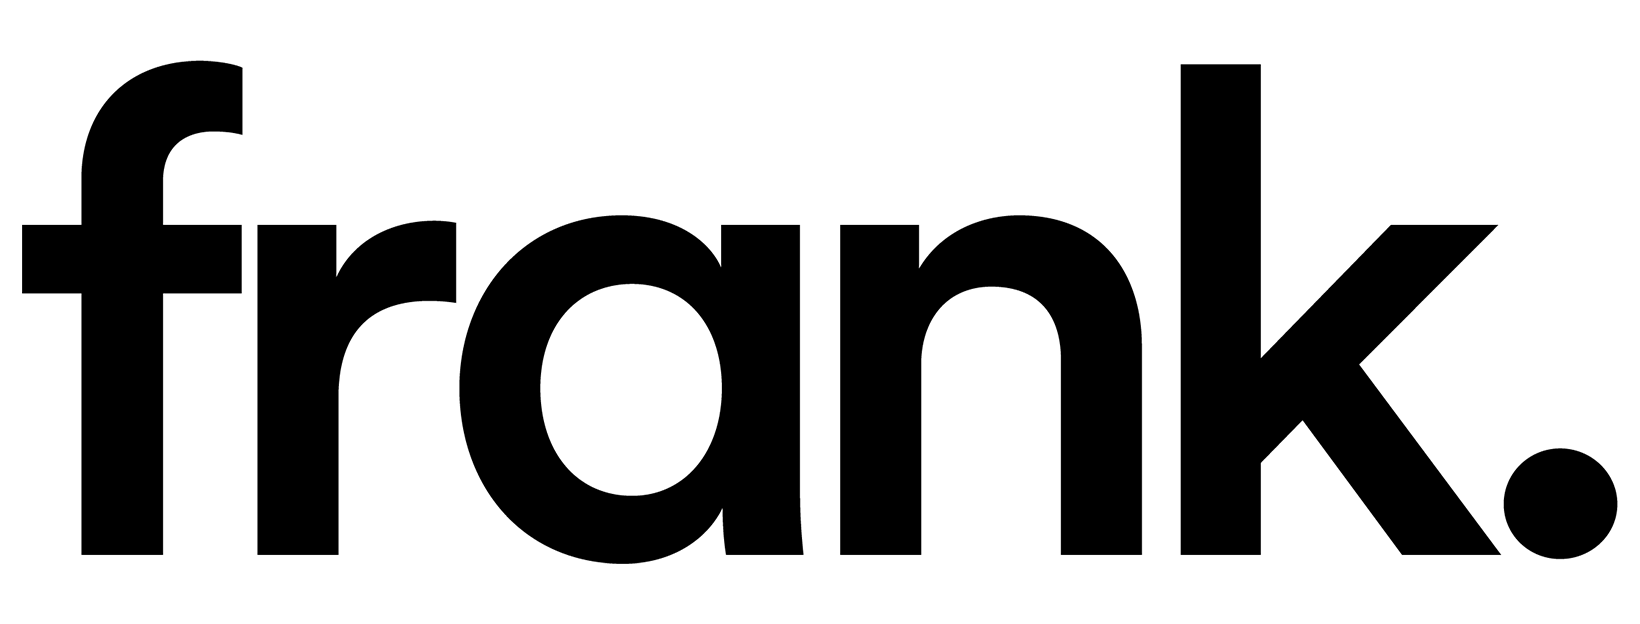 thefrankjuice logo